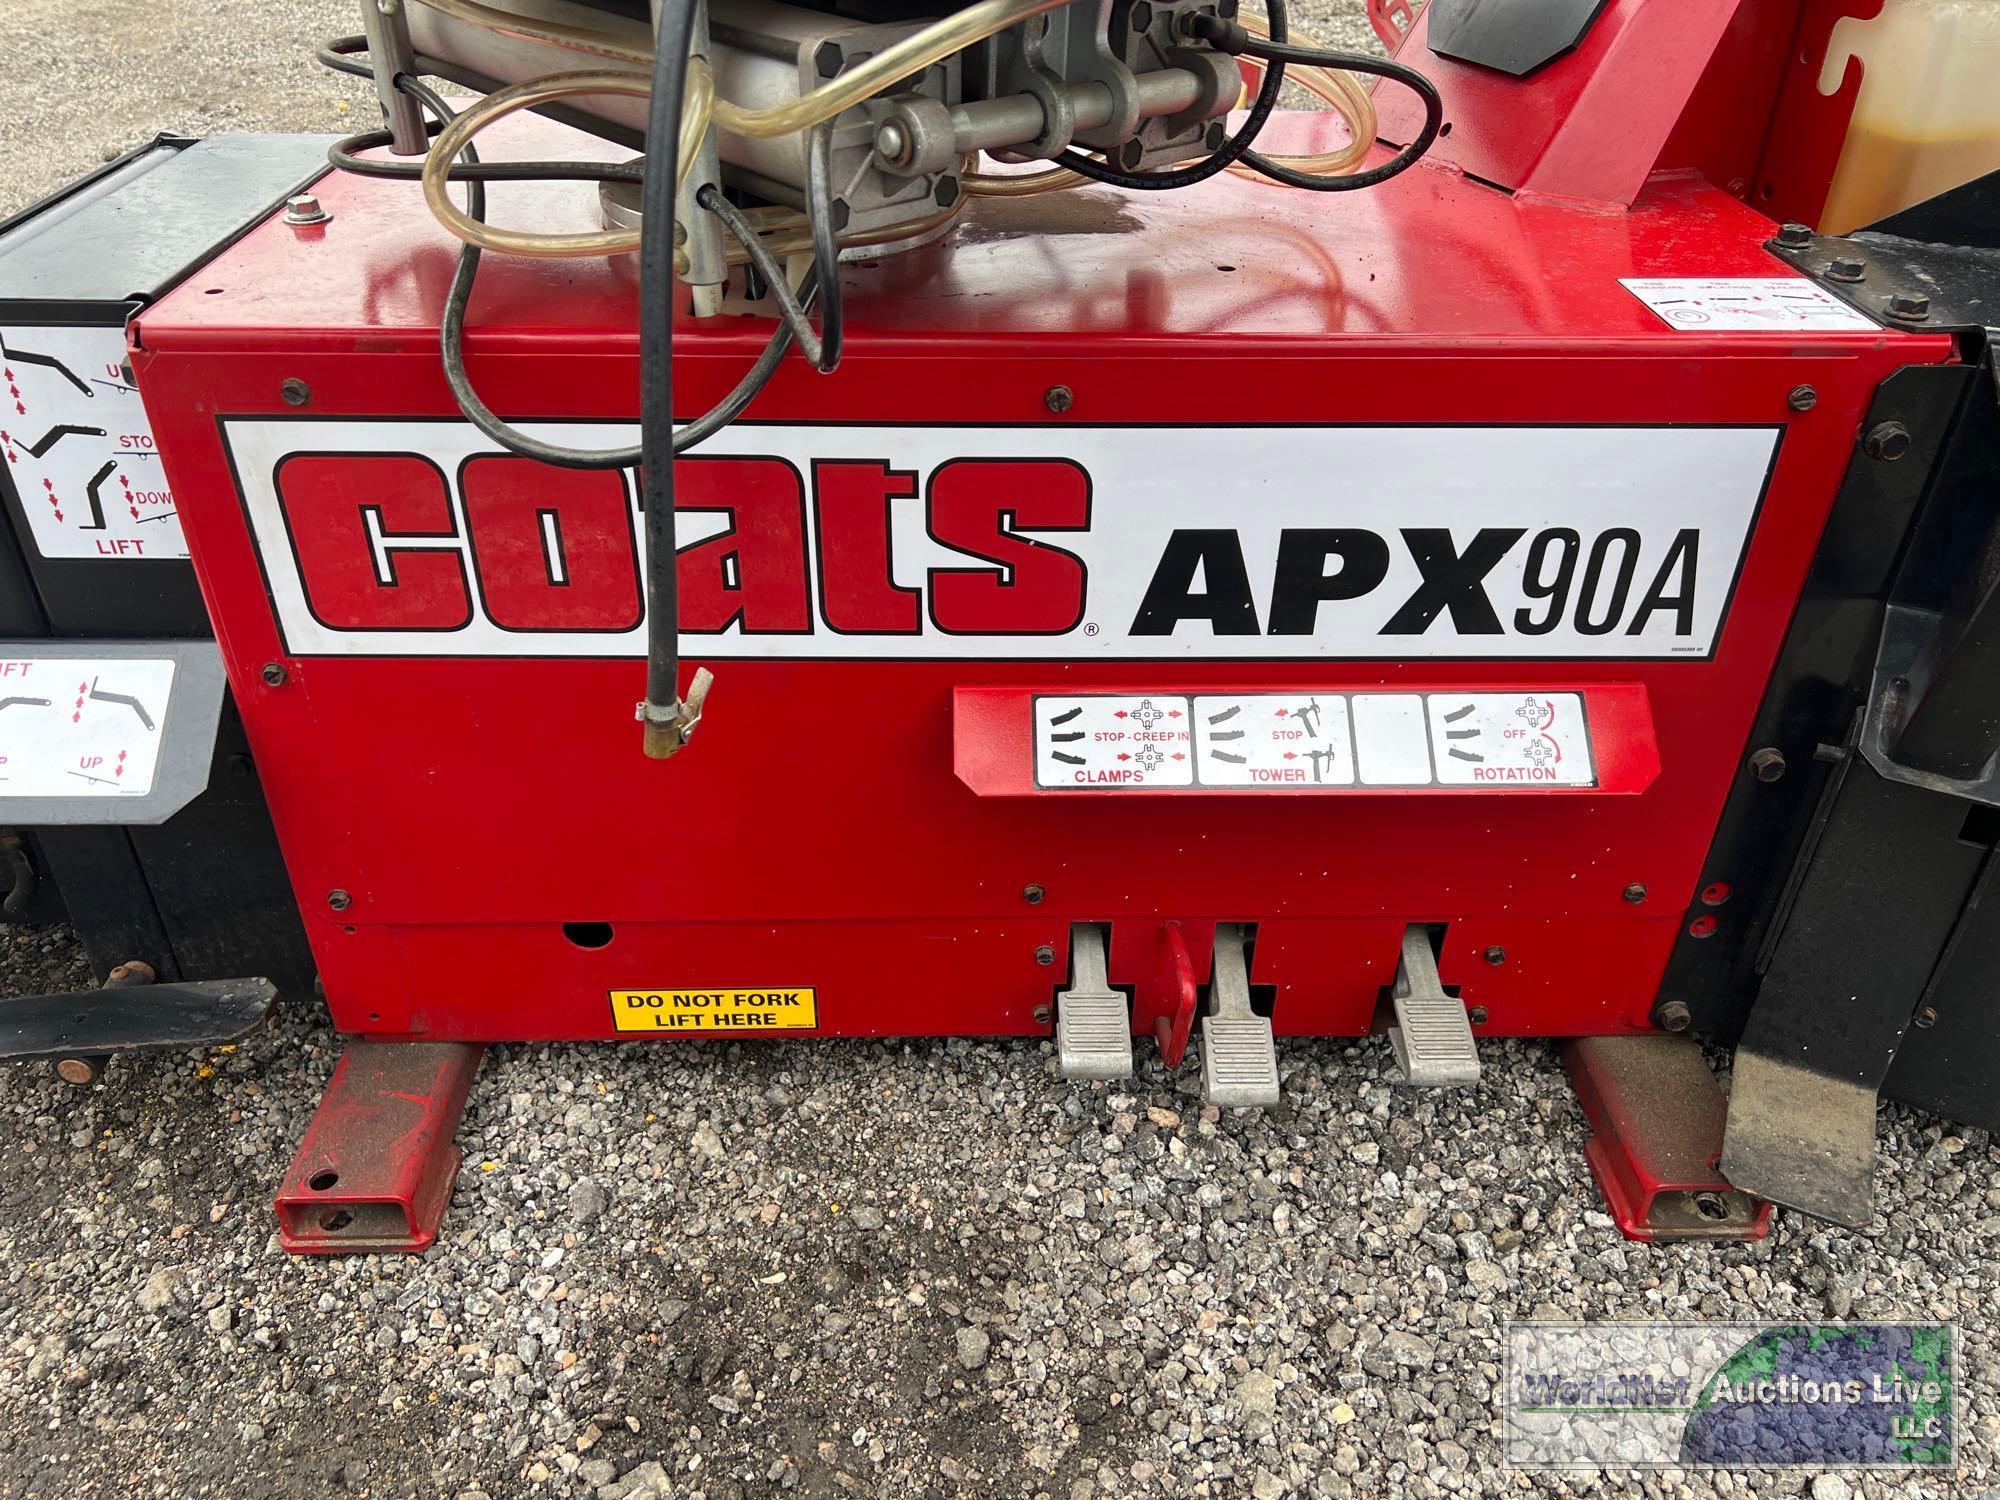 COATS APEX 90A TIRE CHANGING MACHINE, SN-1905102466